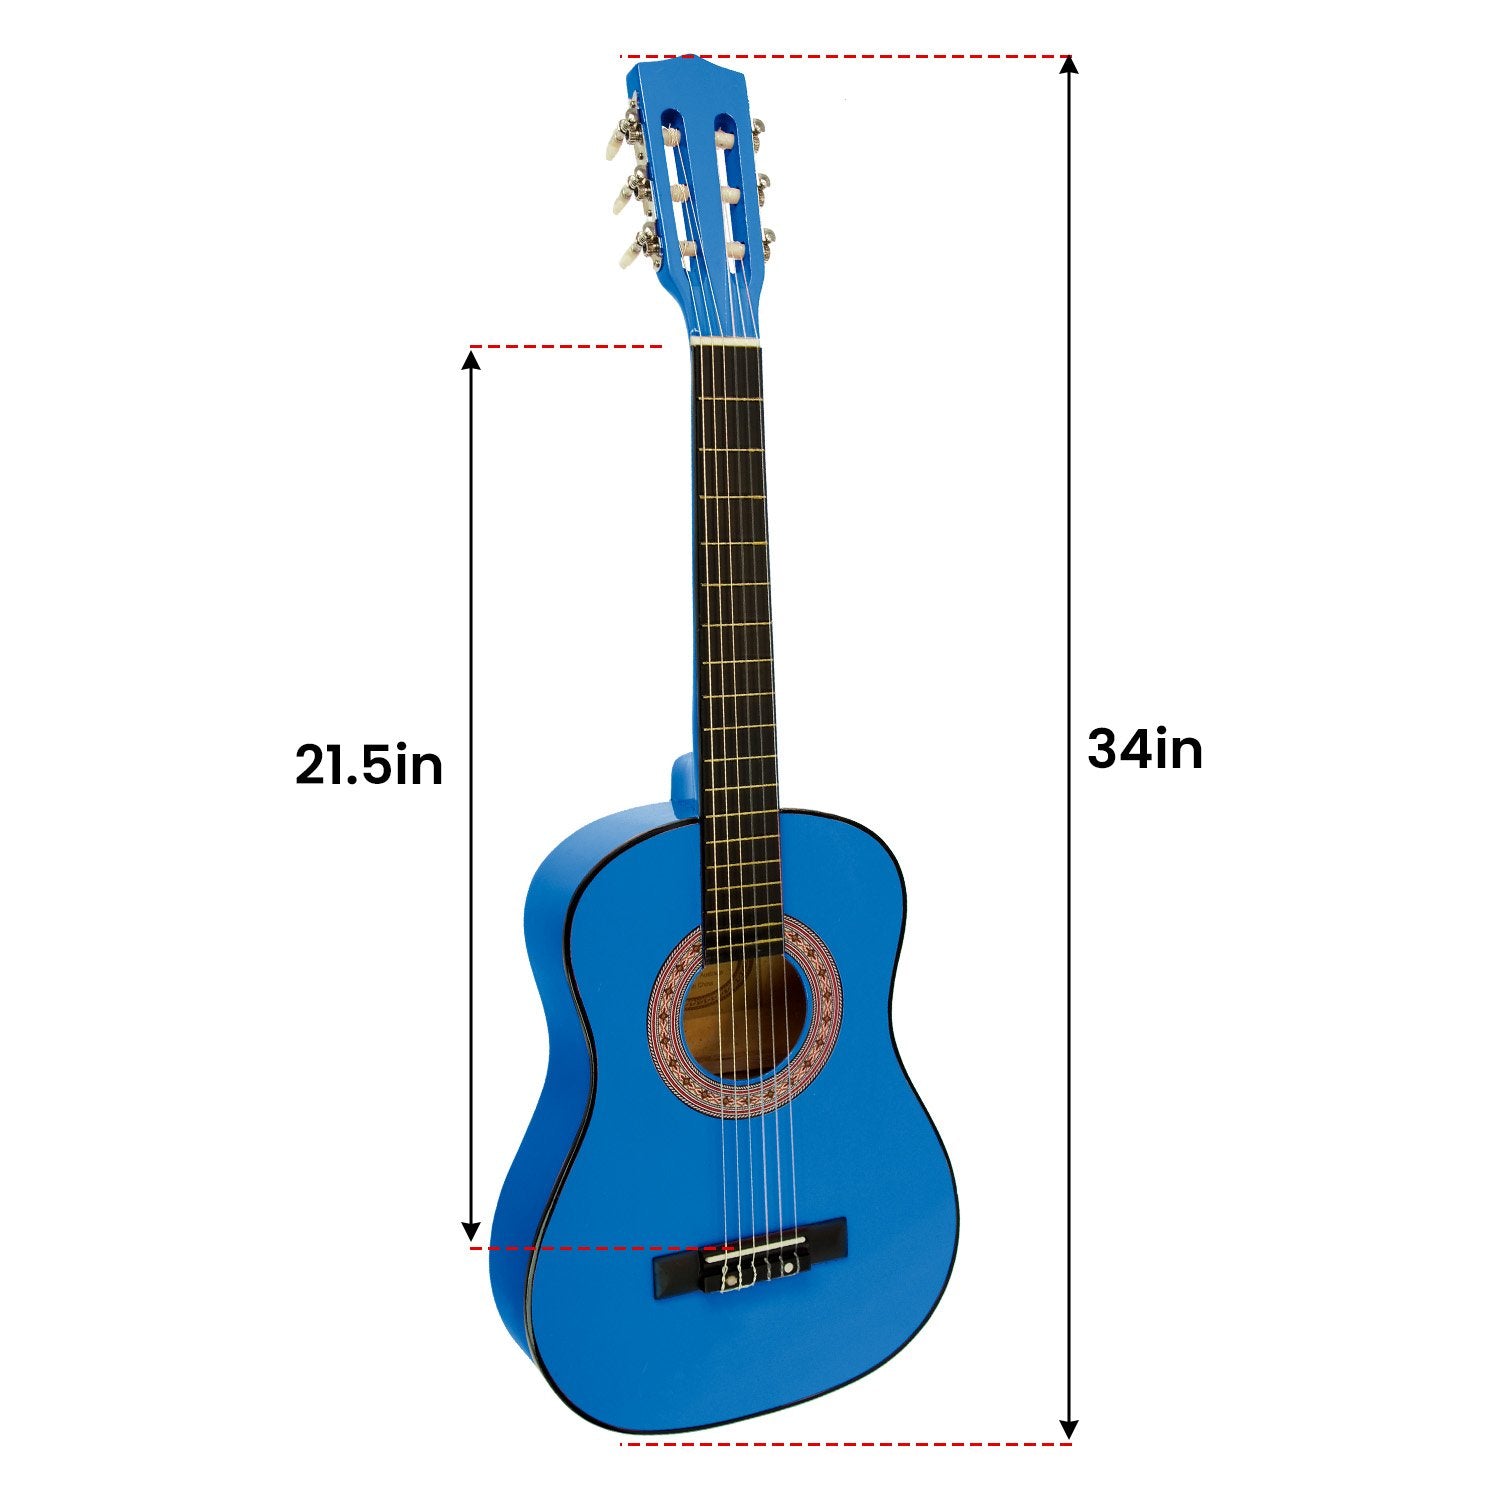 34in Acoustic Children’s Guitar with Case & Picks - Karrera